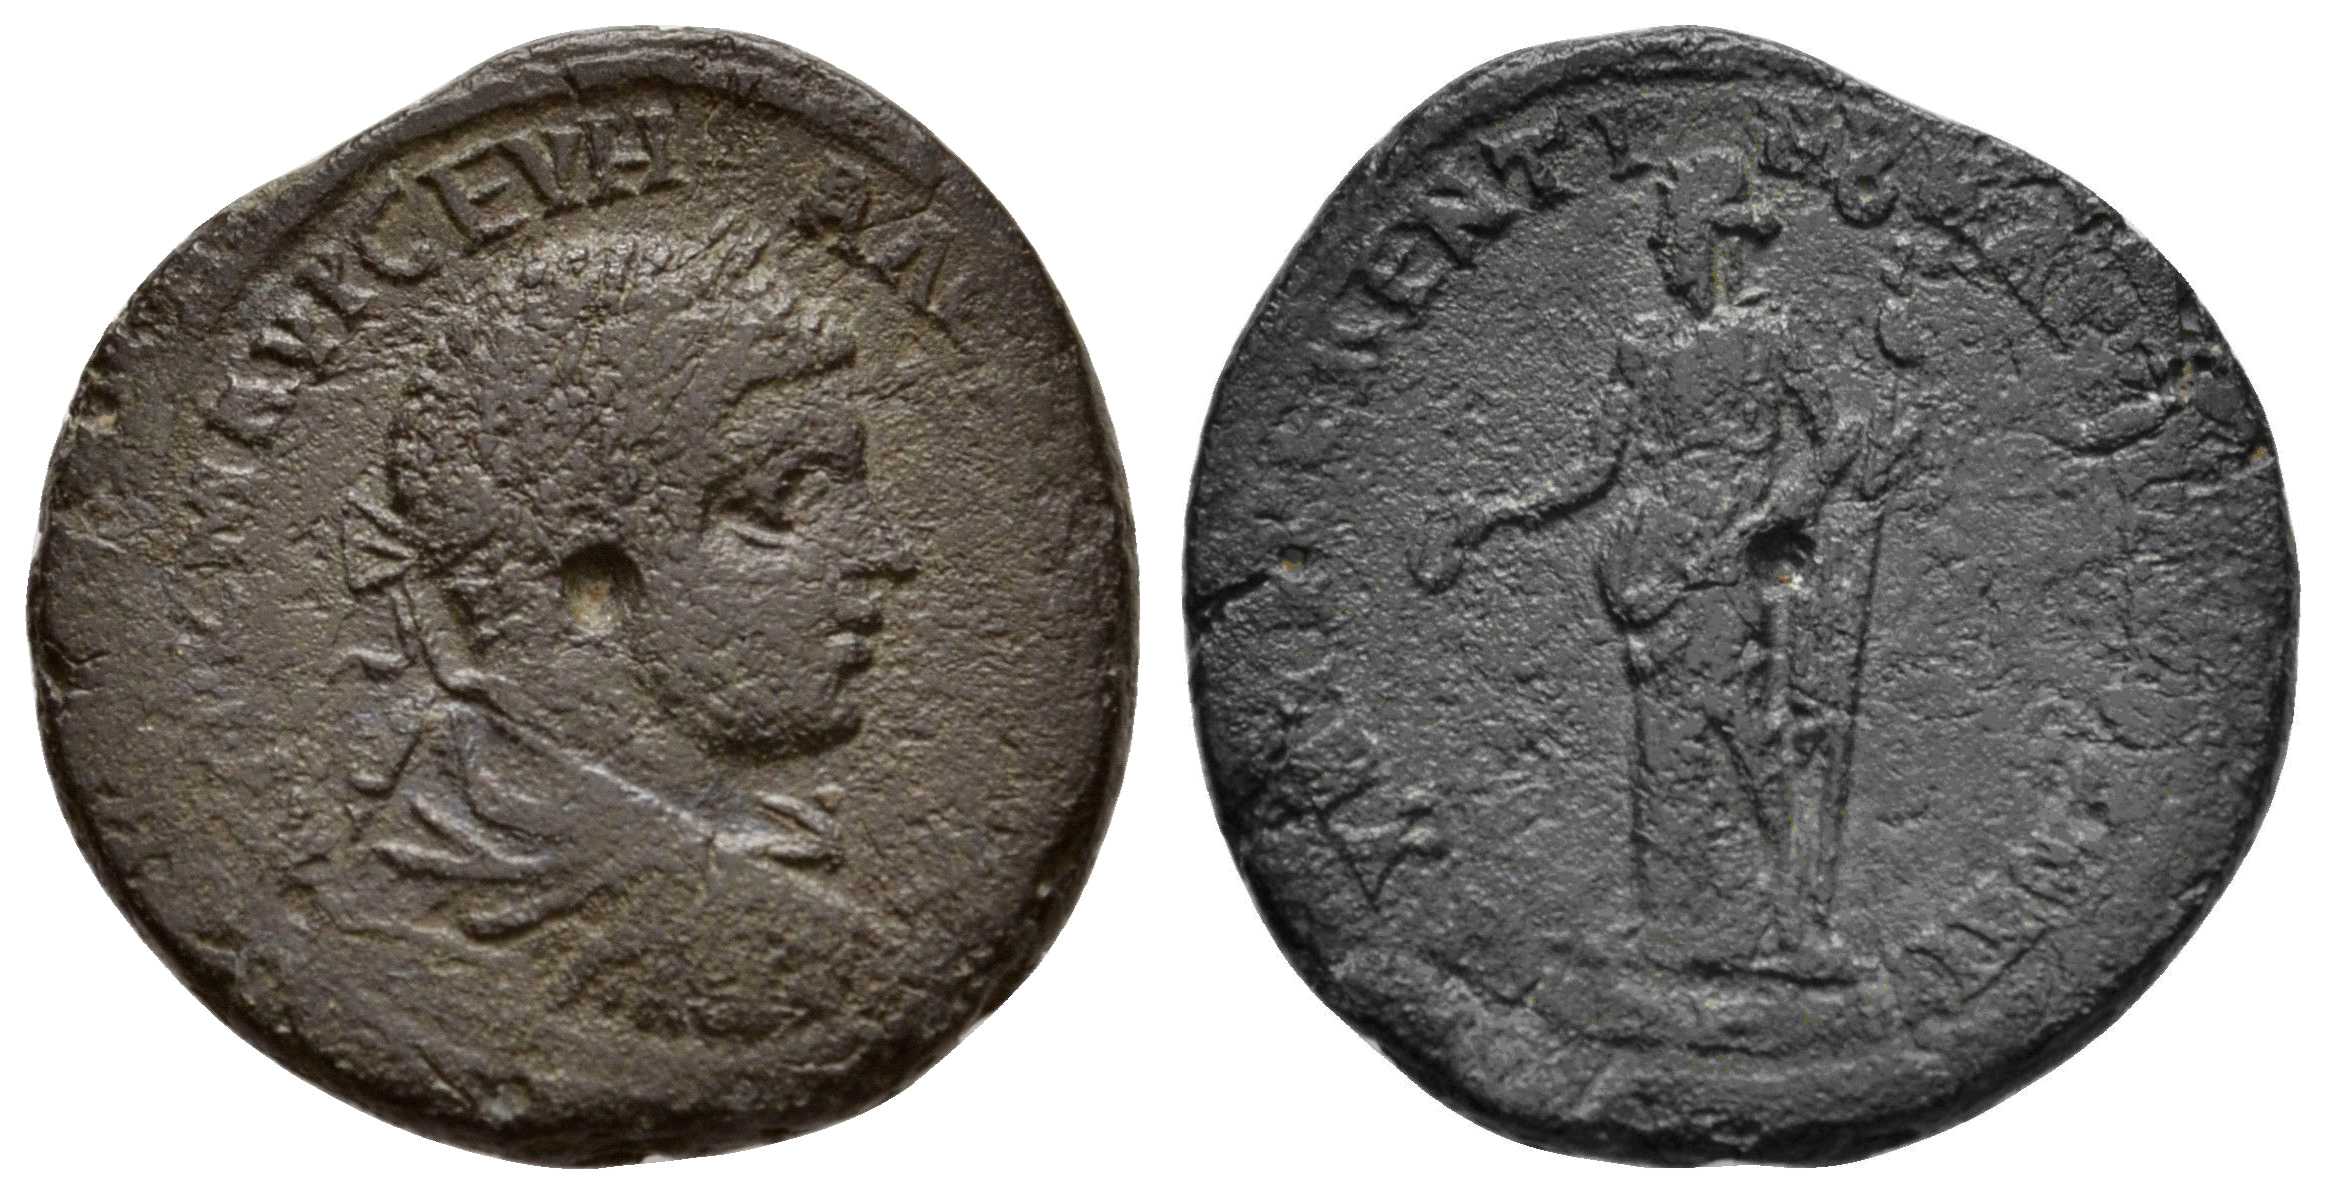 6181 Marcianopolis Moesia Inferior Severus Alexander AE